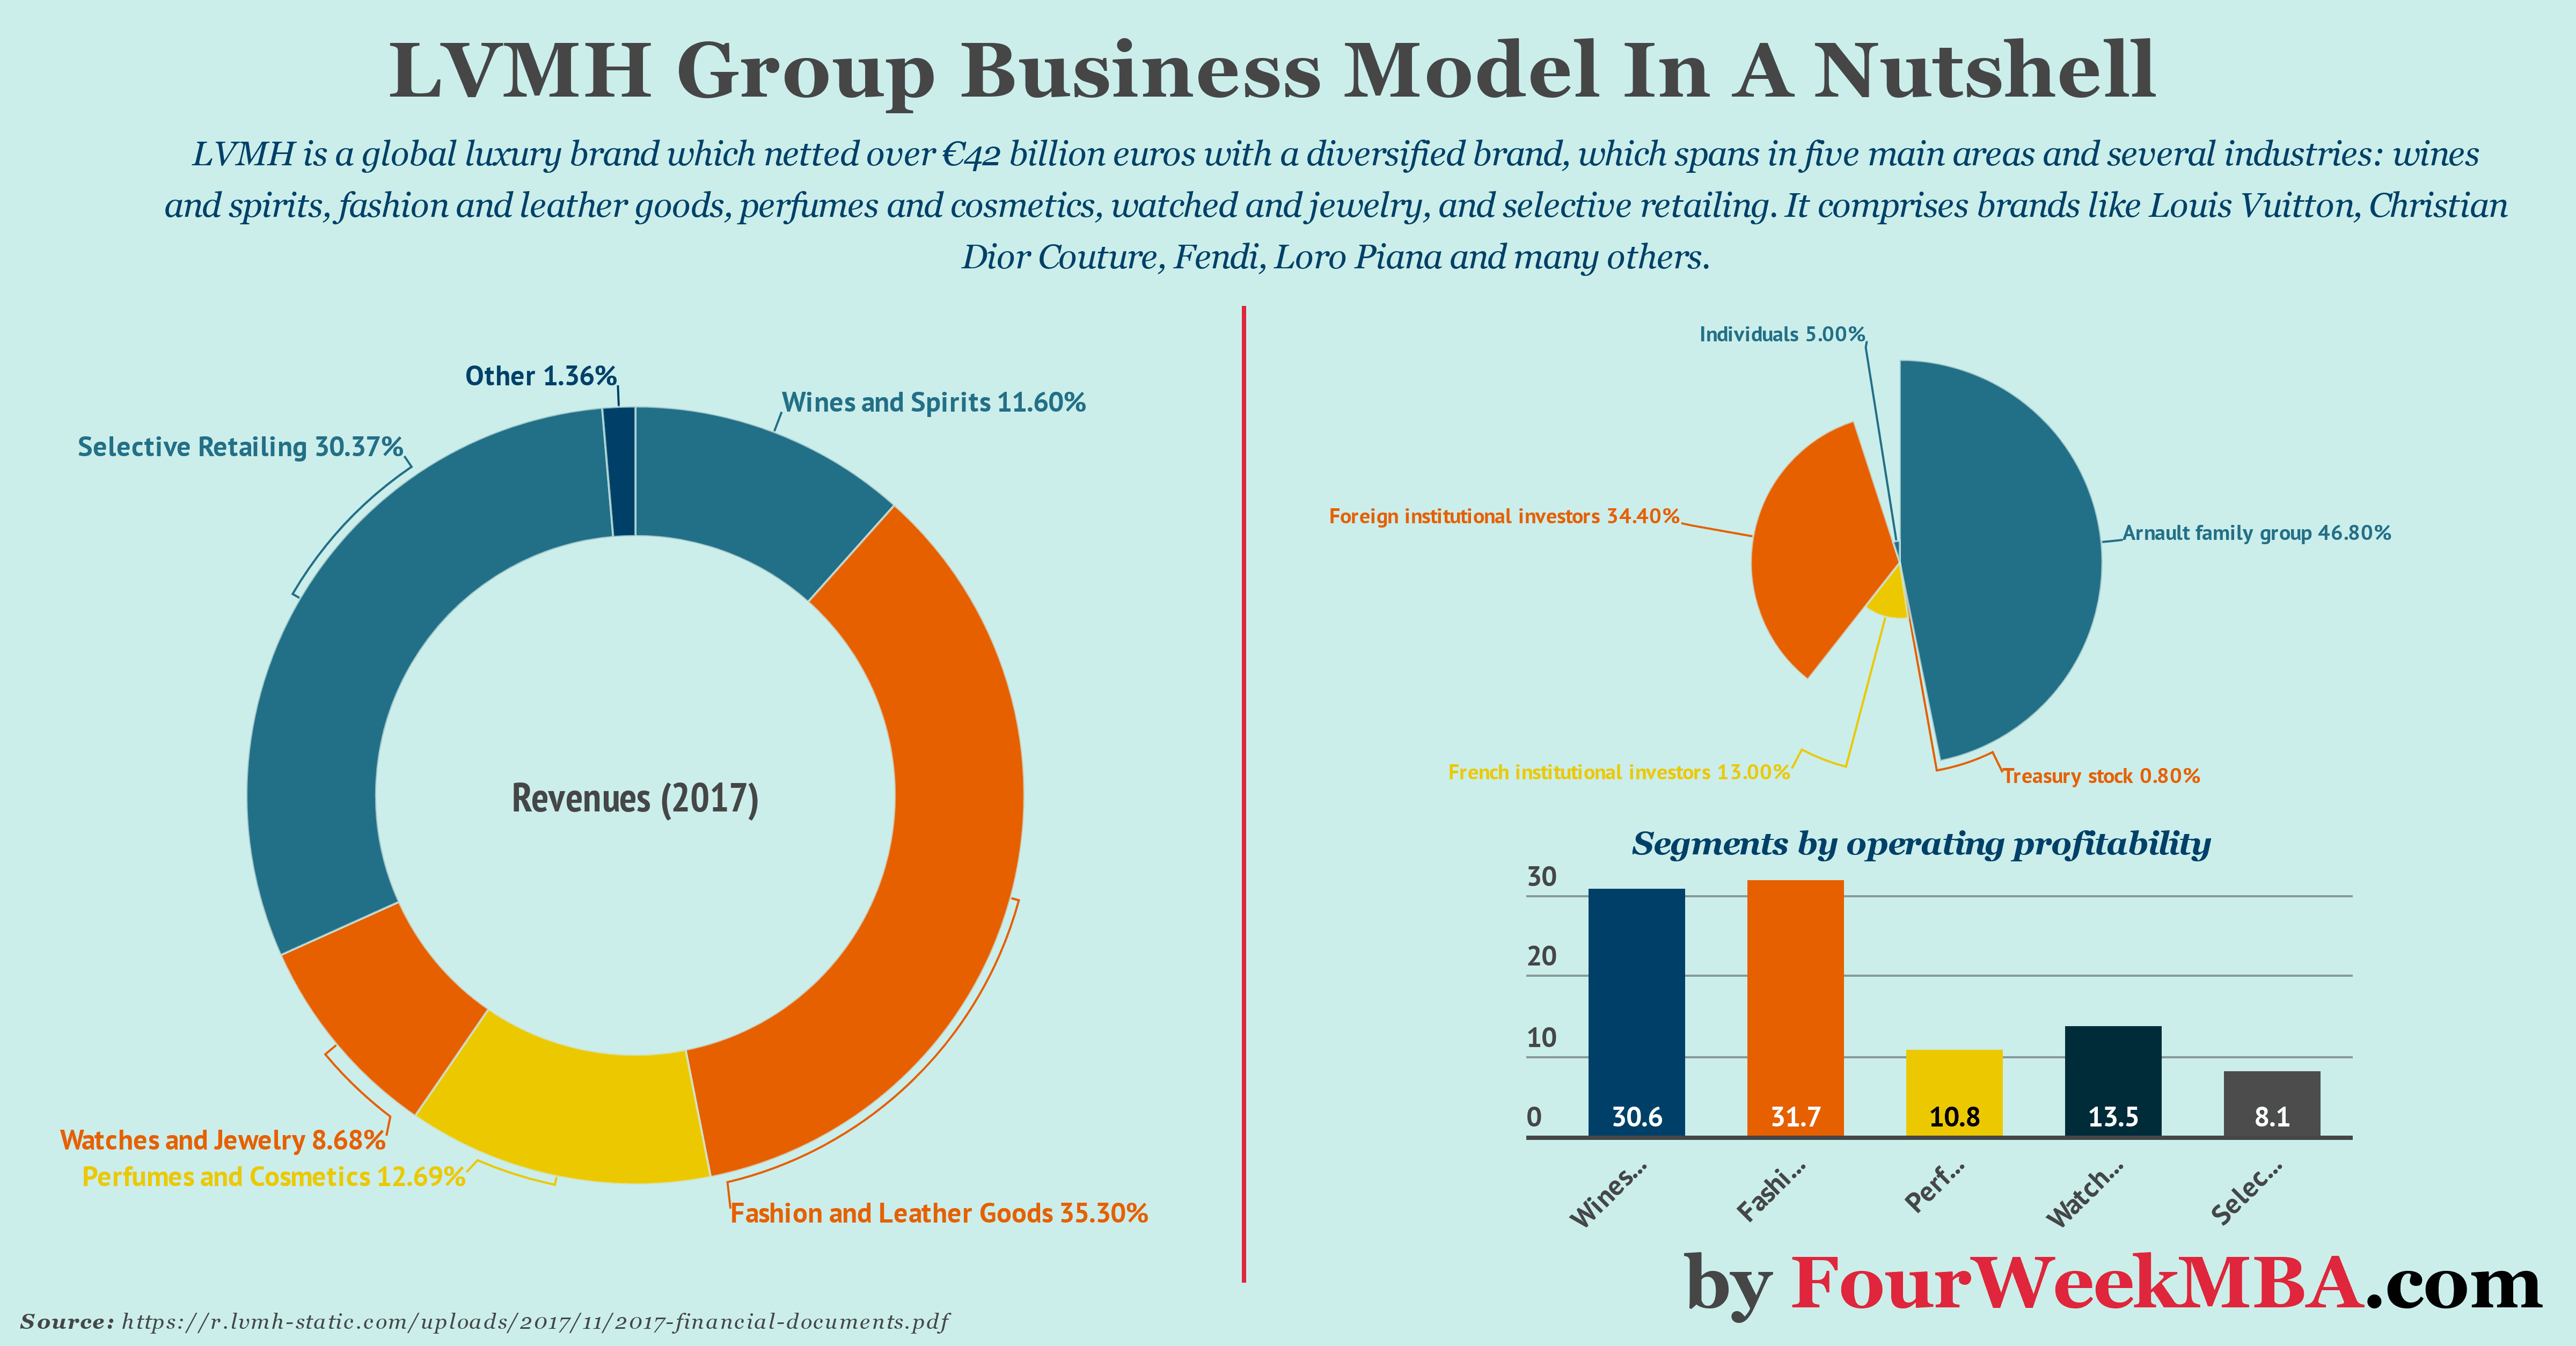 Bernard Arnault Empire: LVMH Group Business Model In A Nutshell - FourWeekMBA